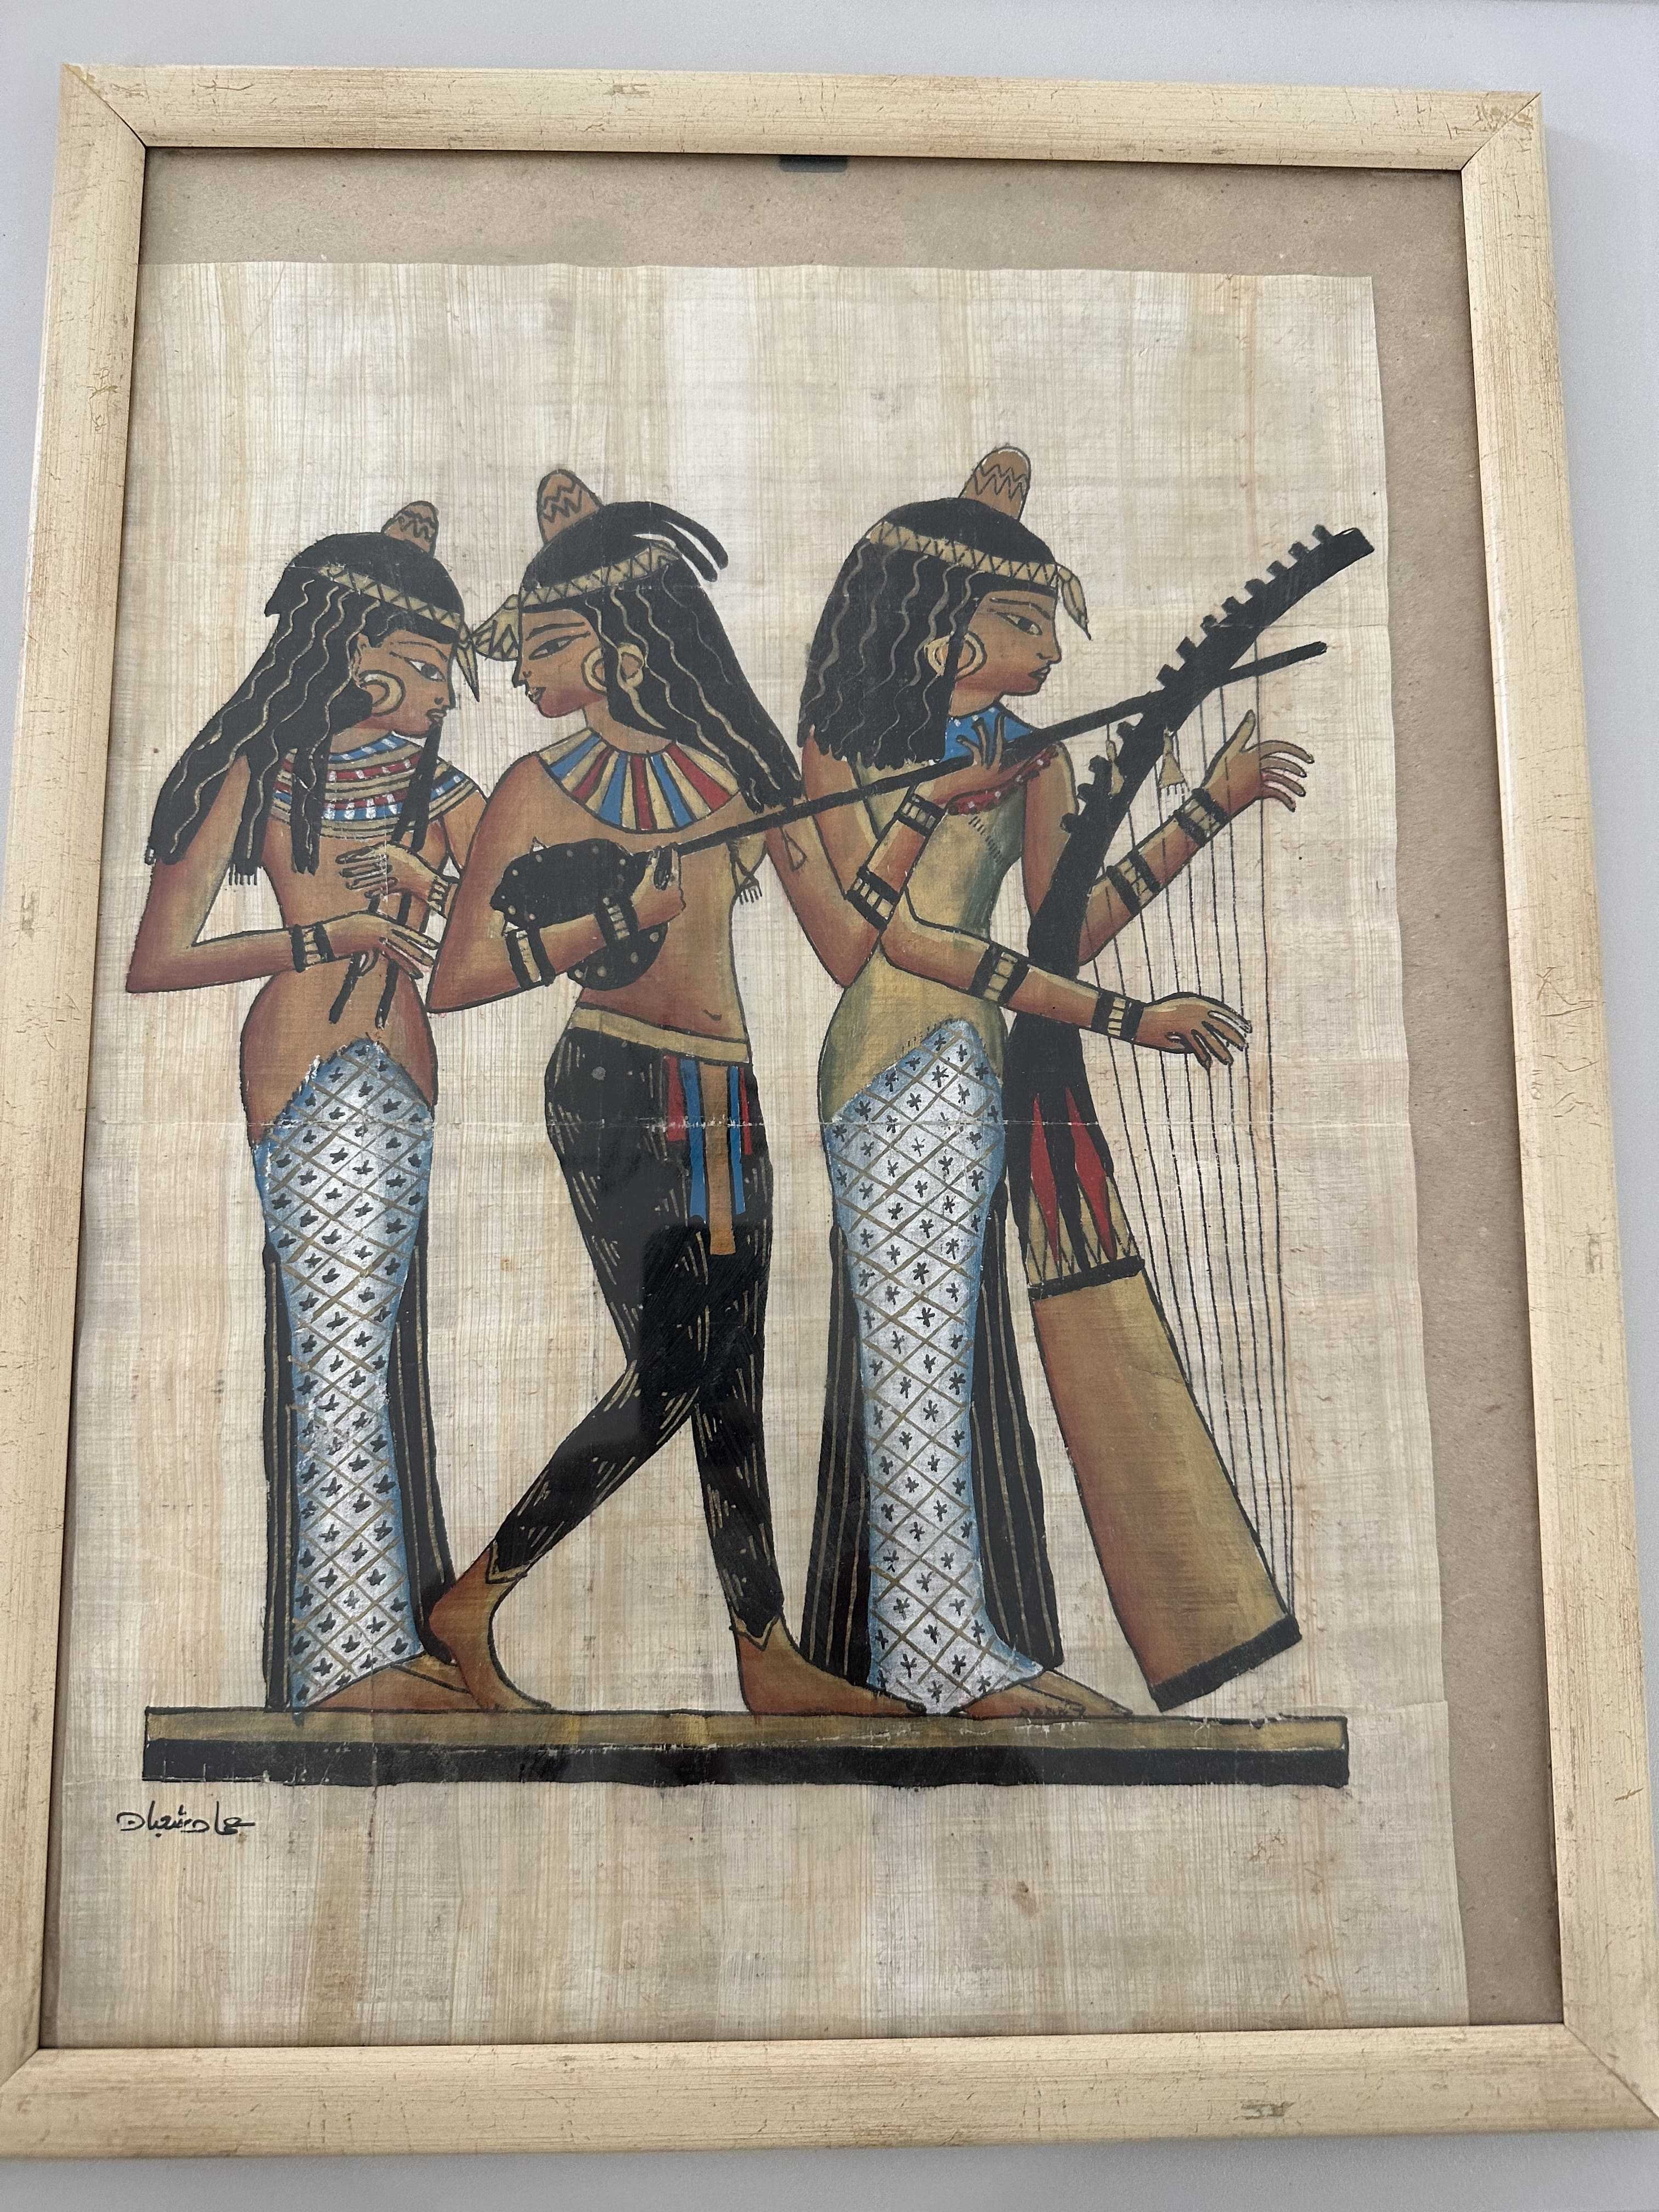 Папирус от Египет с рамка 36х26см